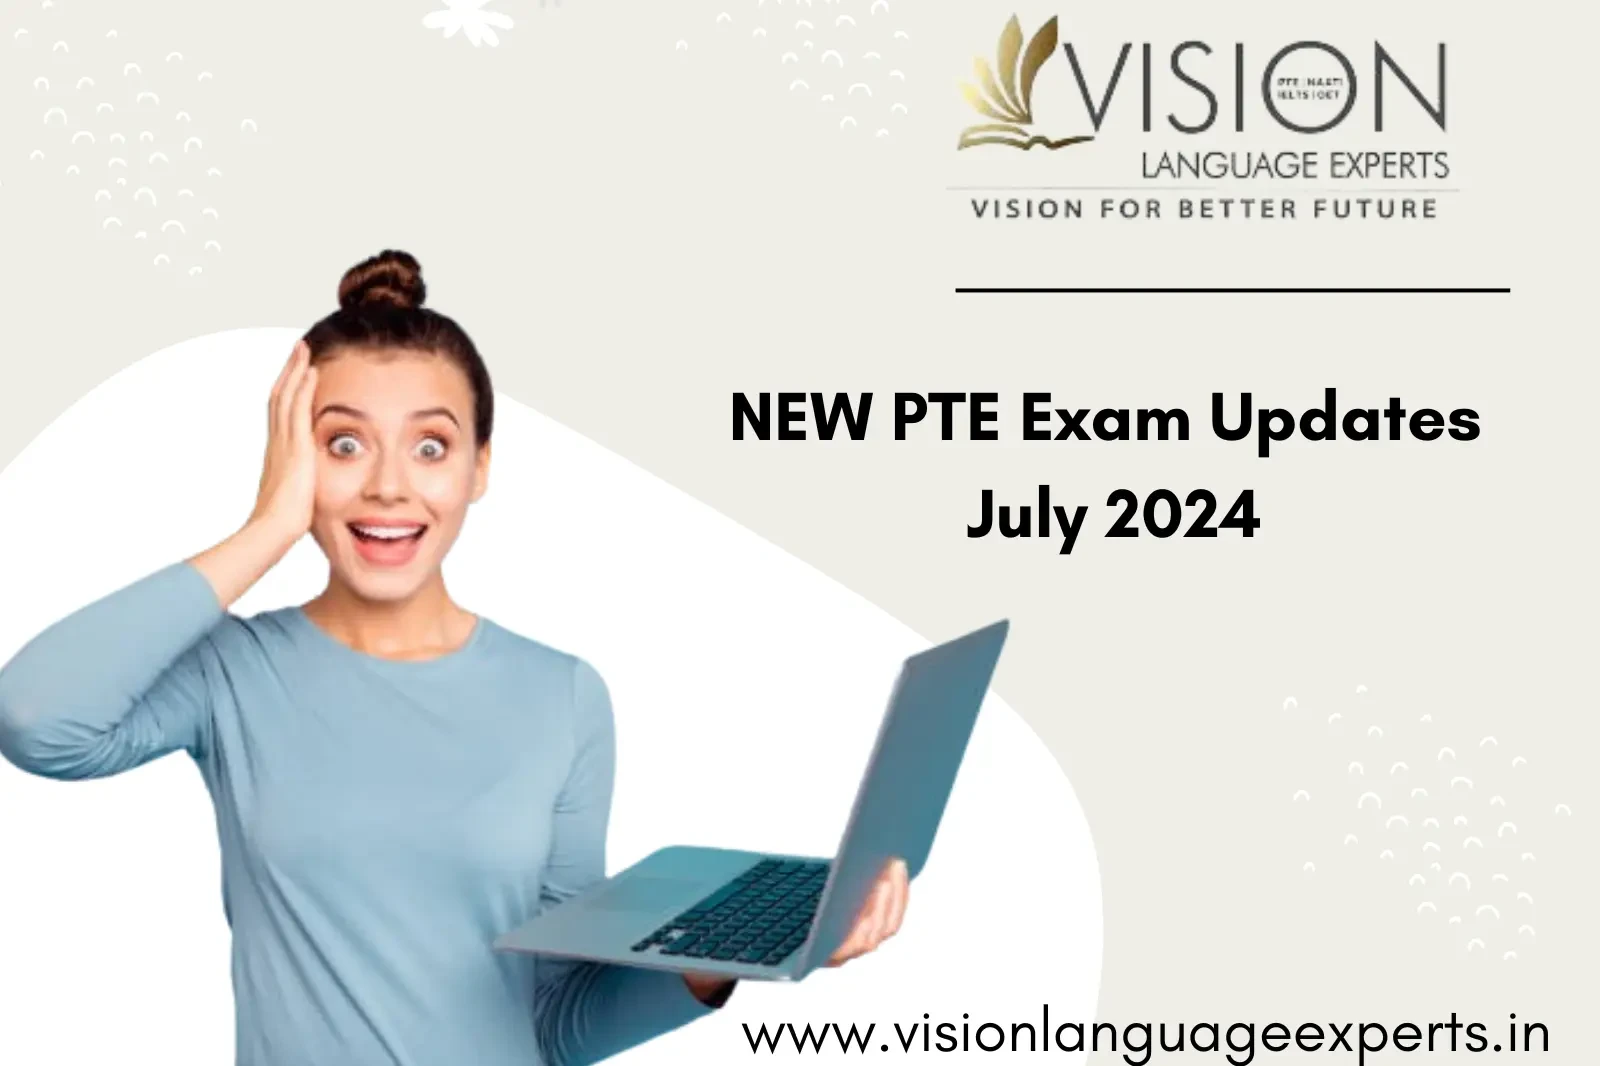 NEW PTE Exam Updates July 2024